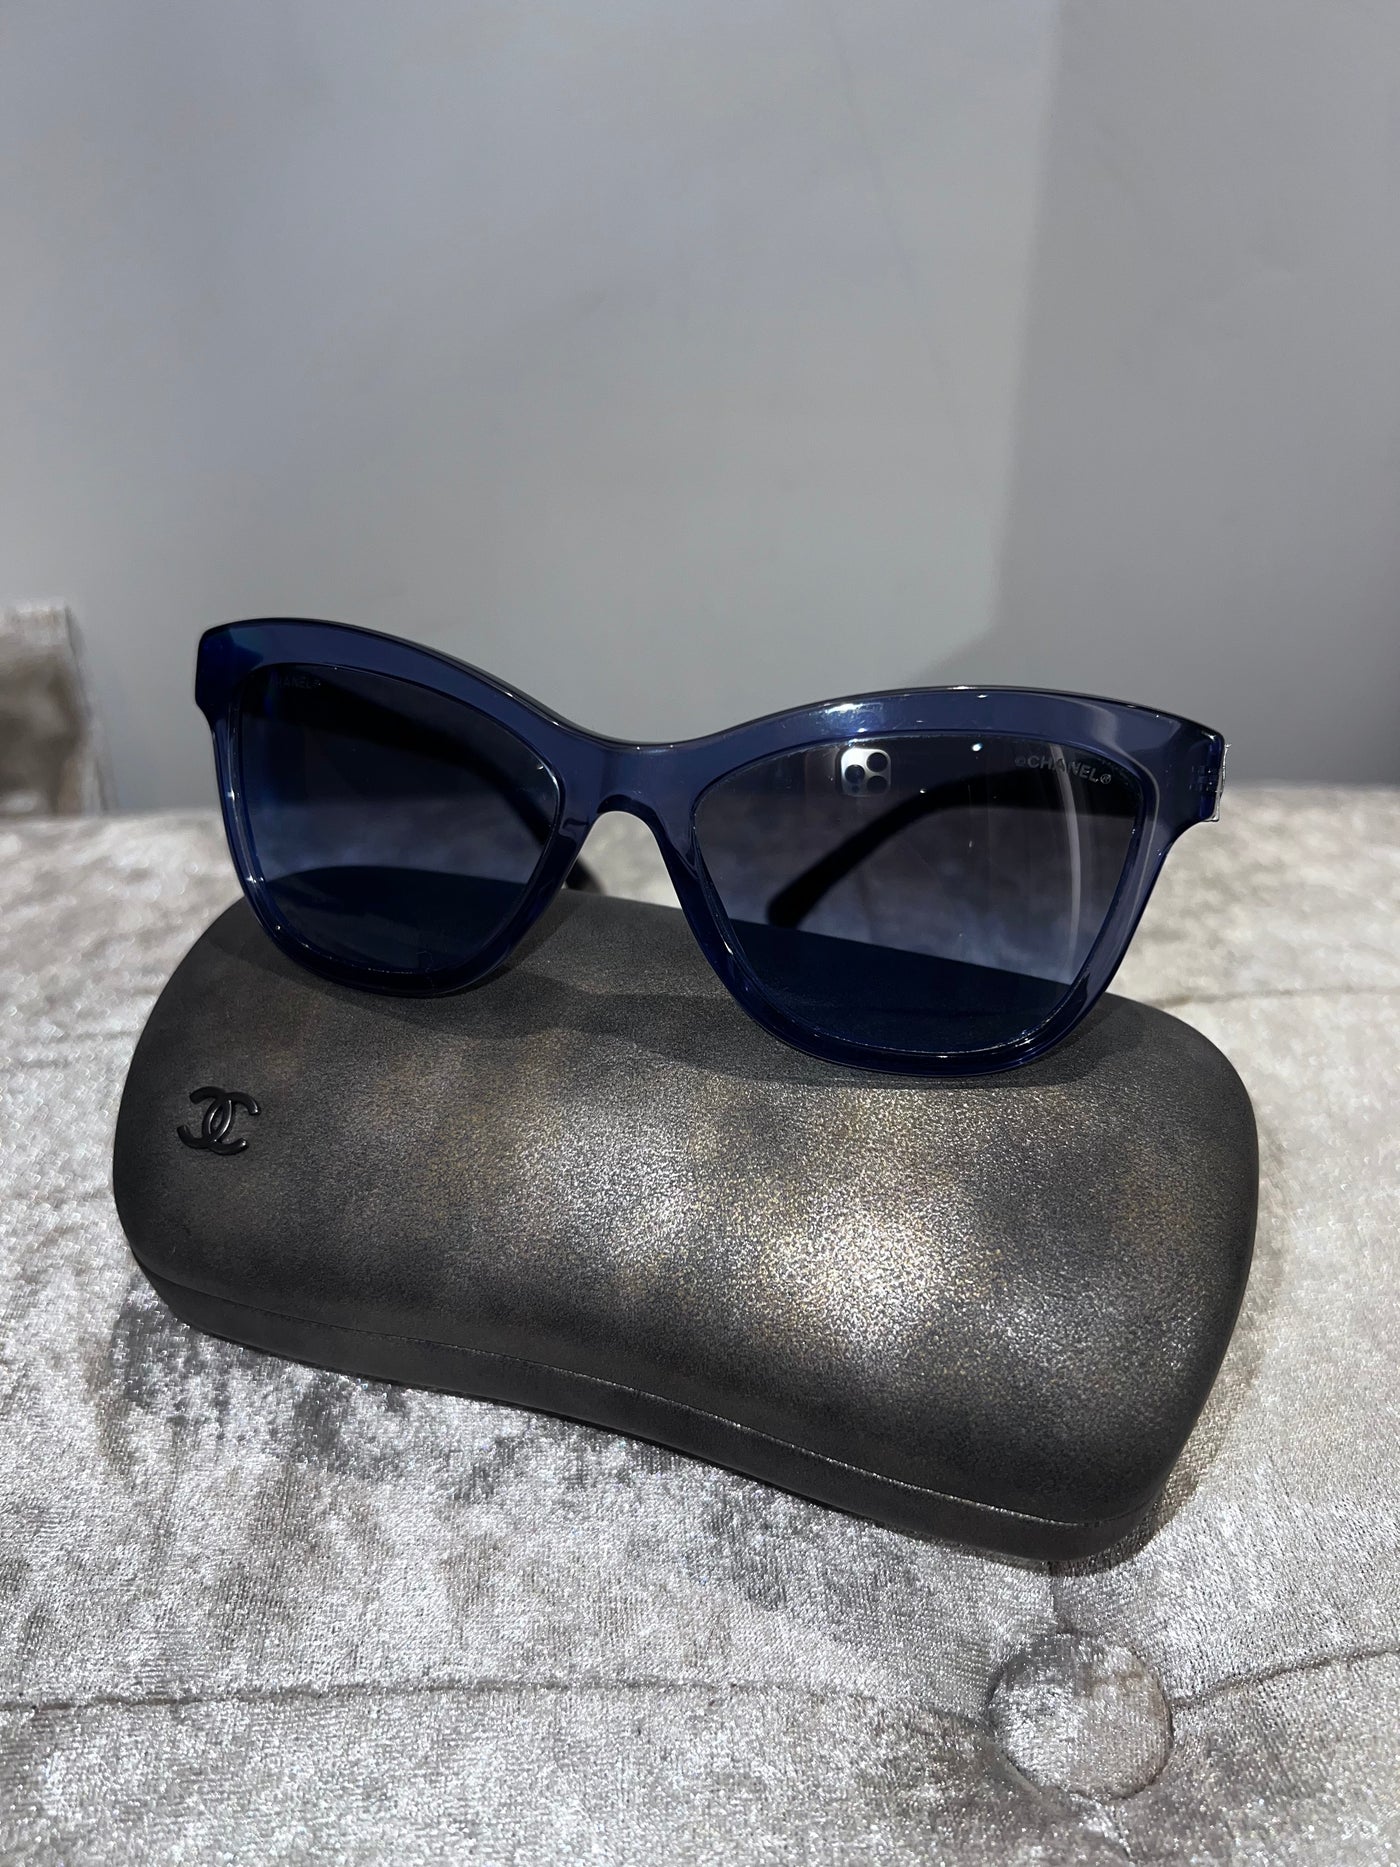 Chanel blue sunglasses